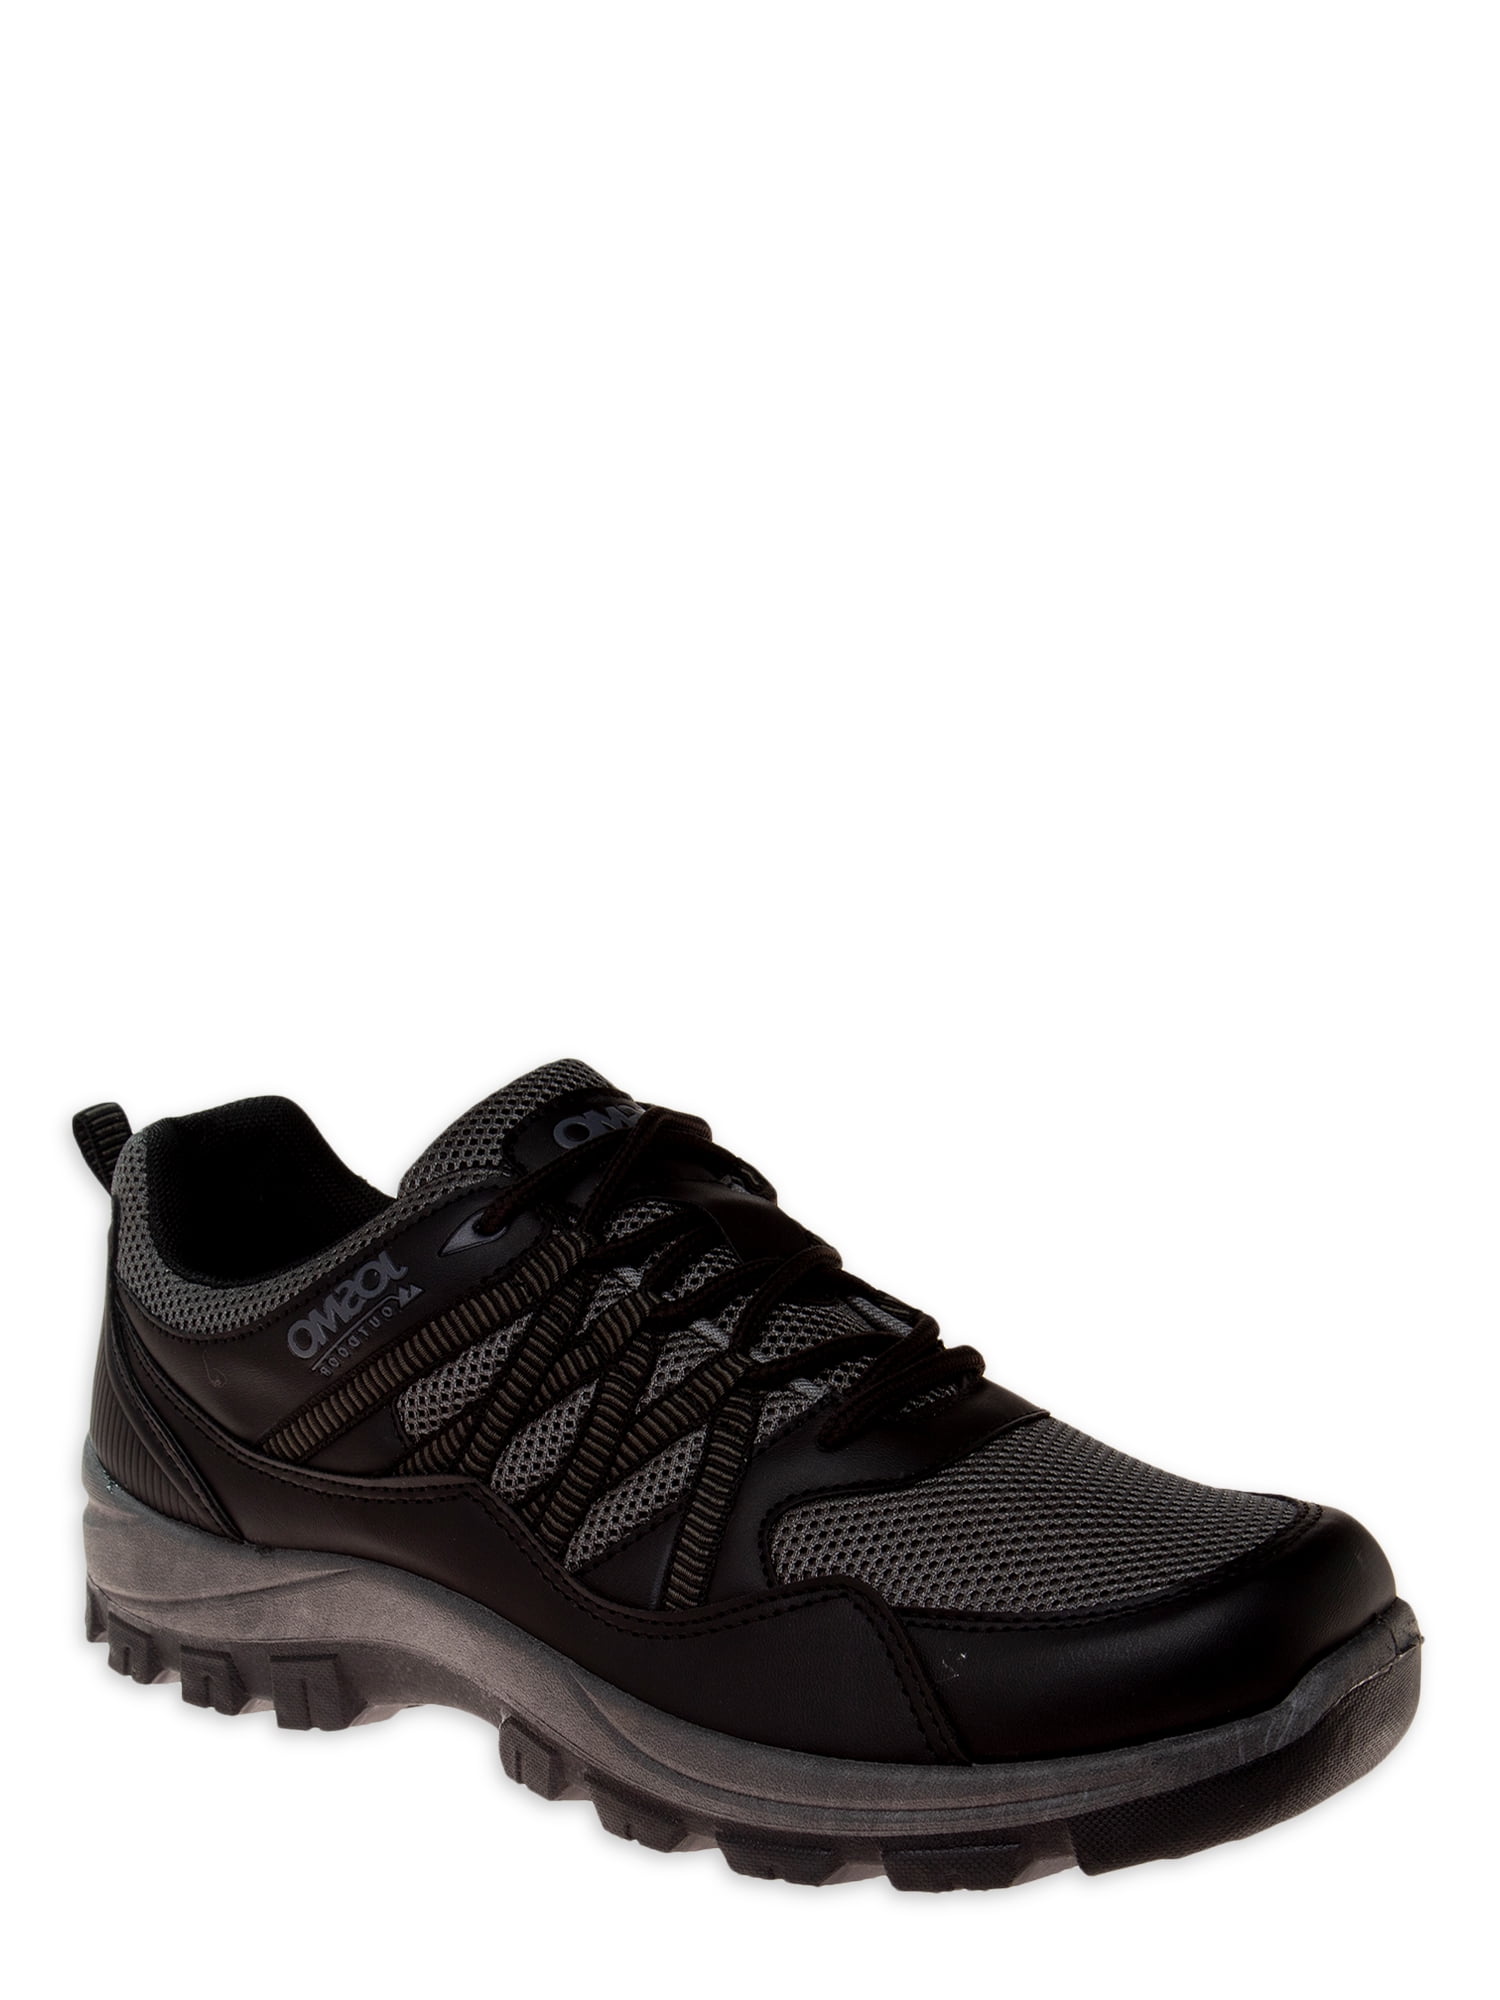 Karrimor Mens Galaxy Sport Hiking Shoes Black/Grey ALL SIZES 